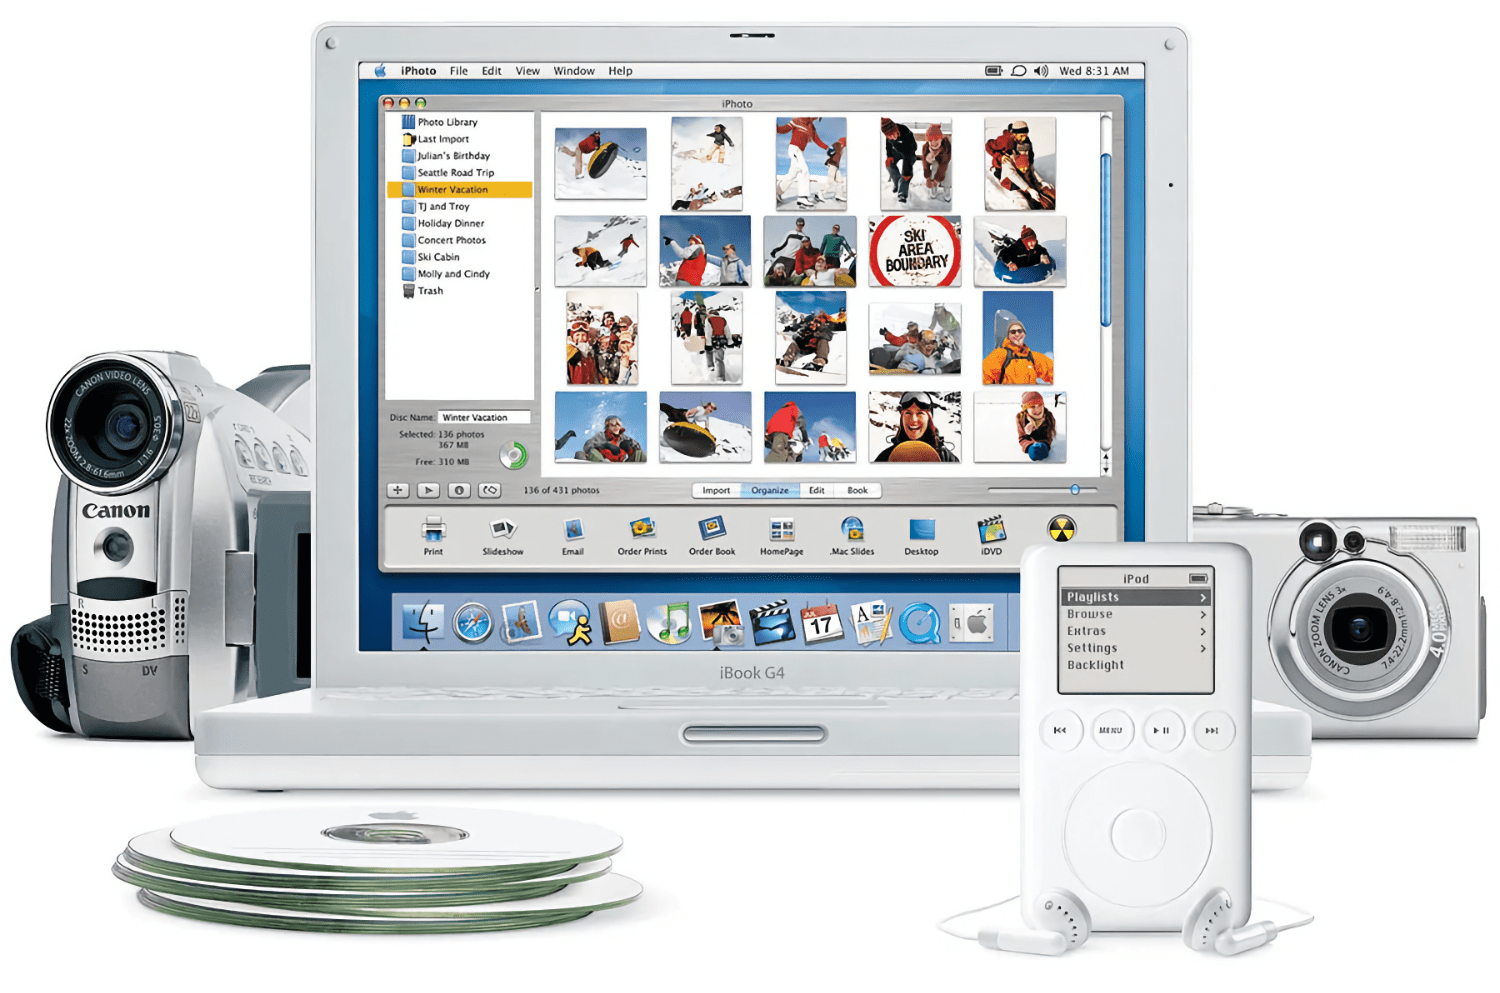 Macintosh Desktop Experience: